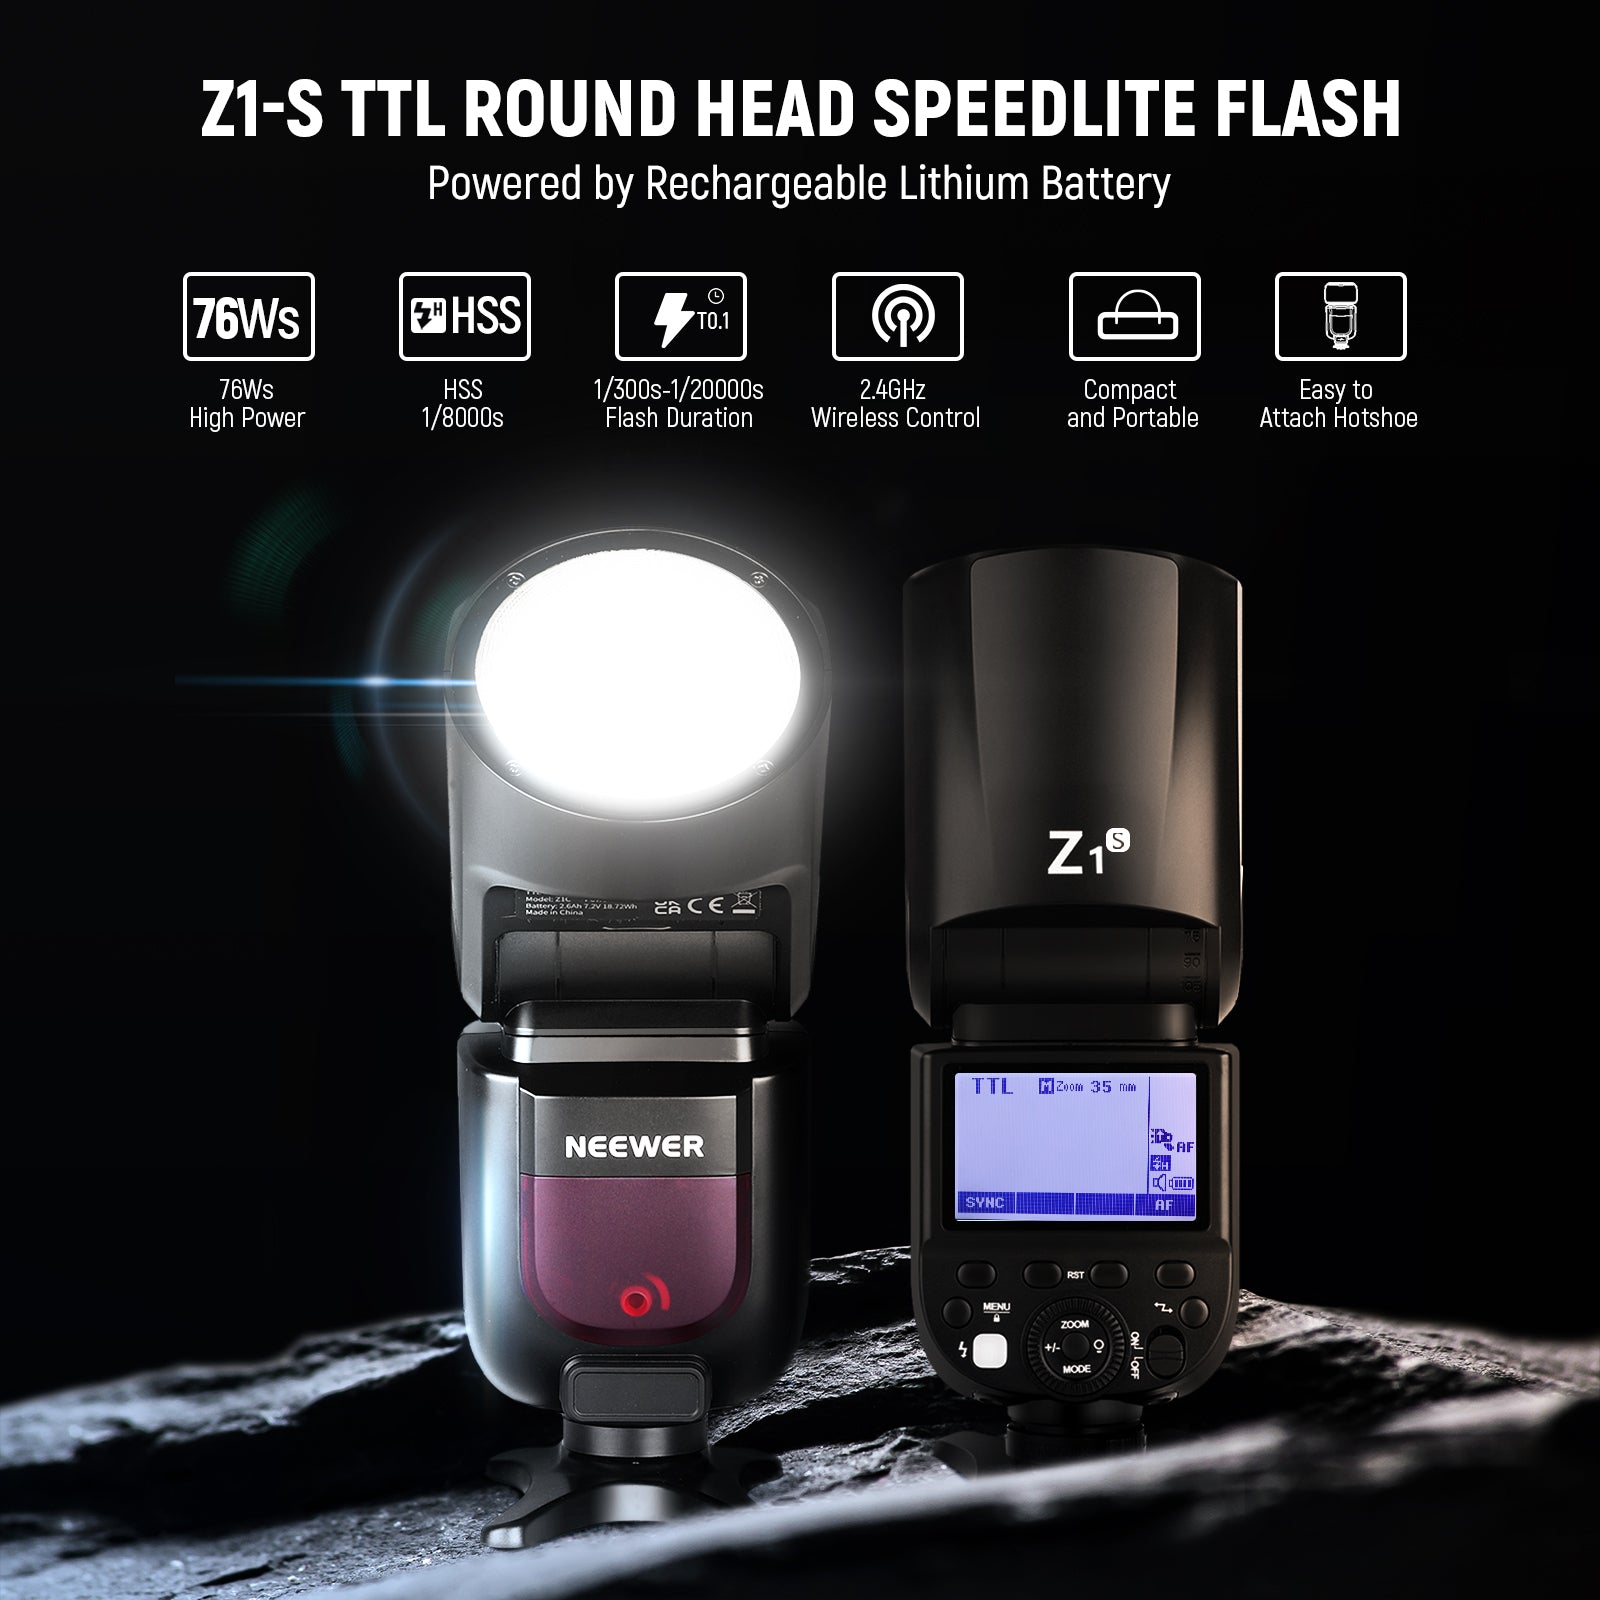 Godox V1-S Camera Flash Speedlight for Sony, Round Head Designed Upgraded  Hot Shoe Compatible with Sony Digital Cameras a9 a7 a7II a7III a7R III  a7RII